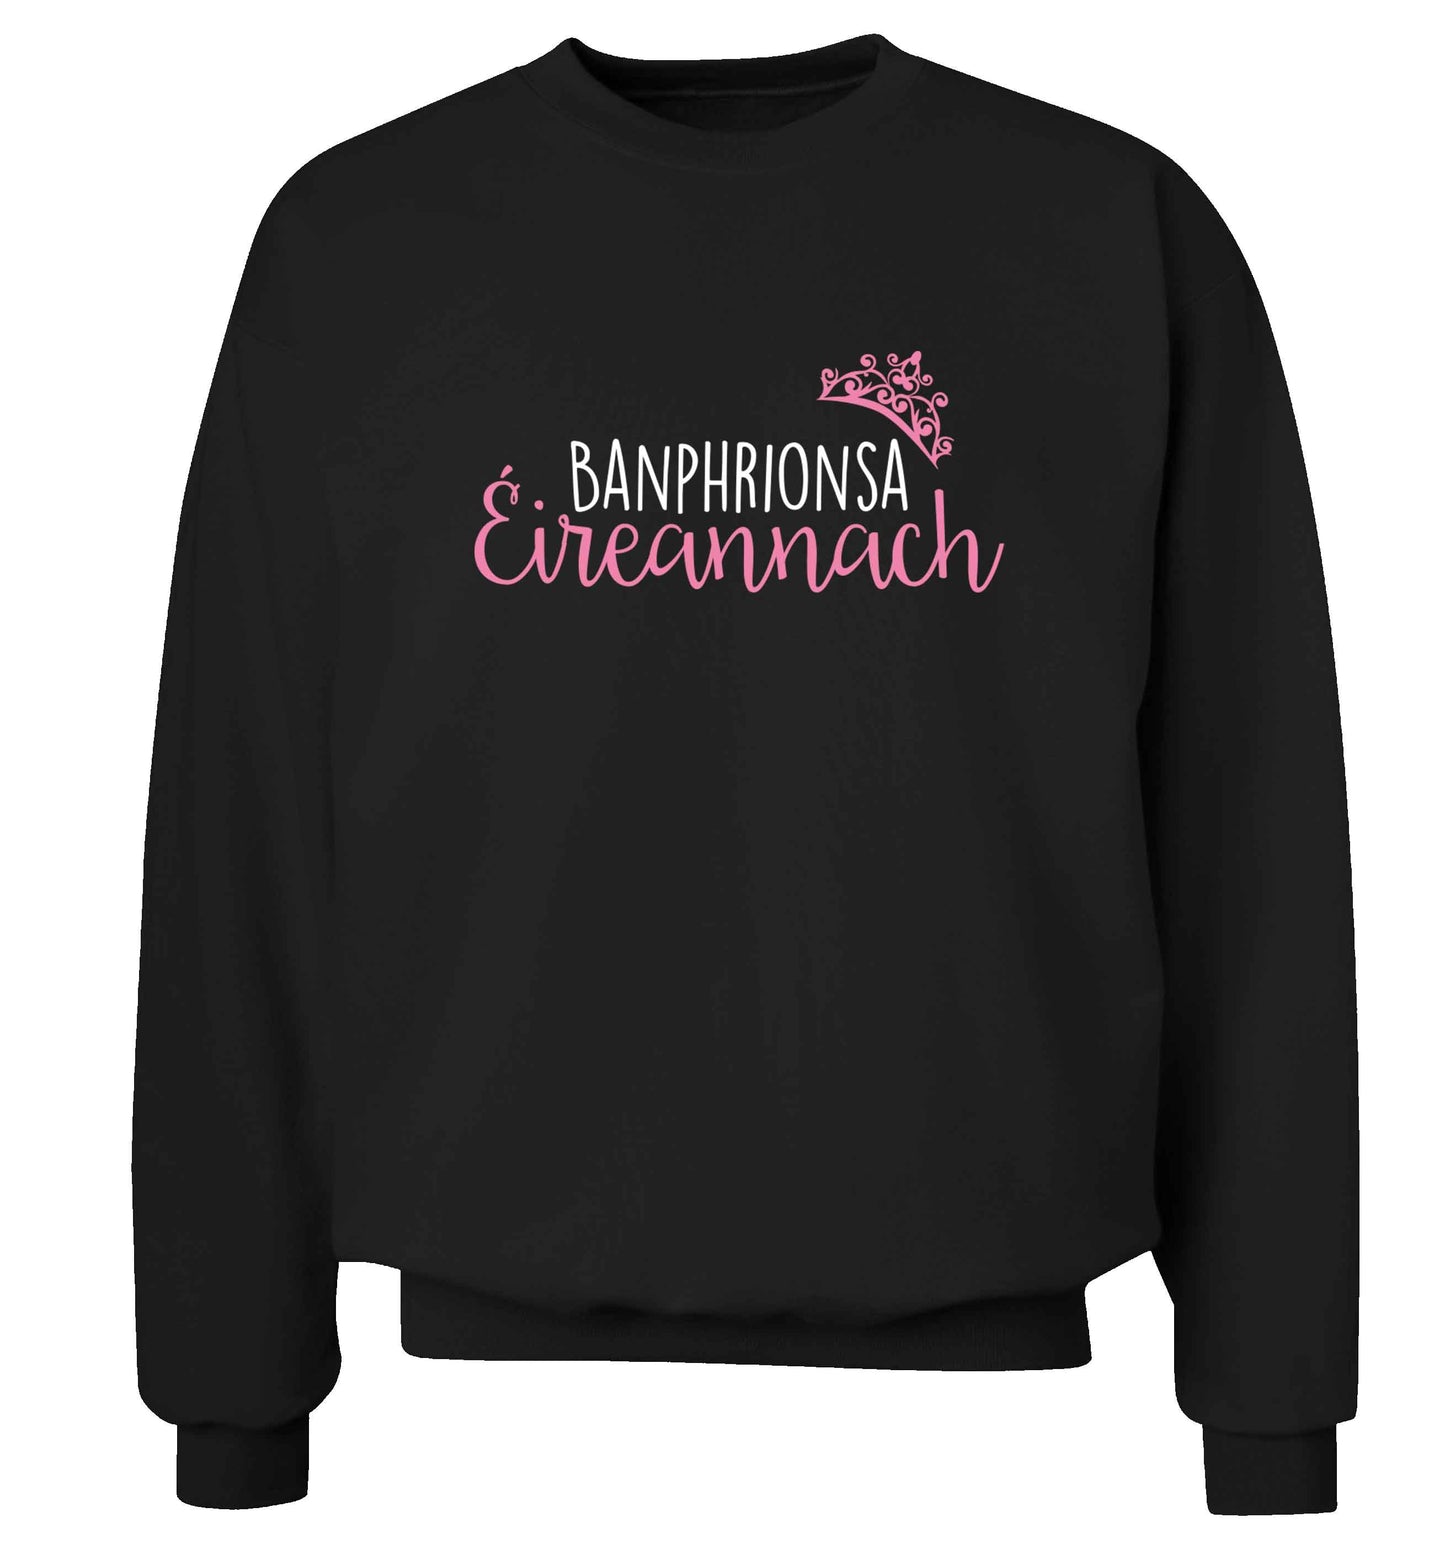 Banphrionsa eireannach adult's unisex black sweater 2XL